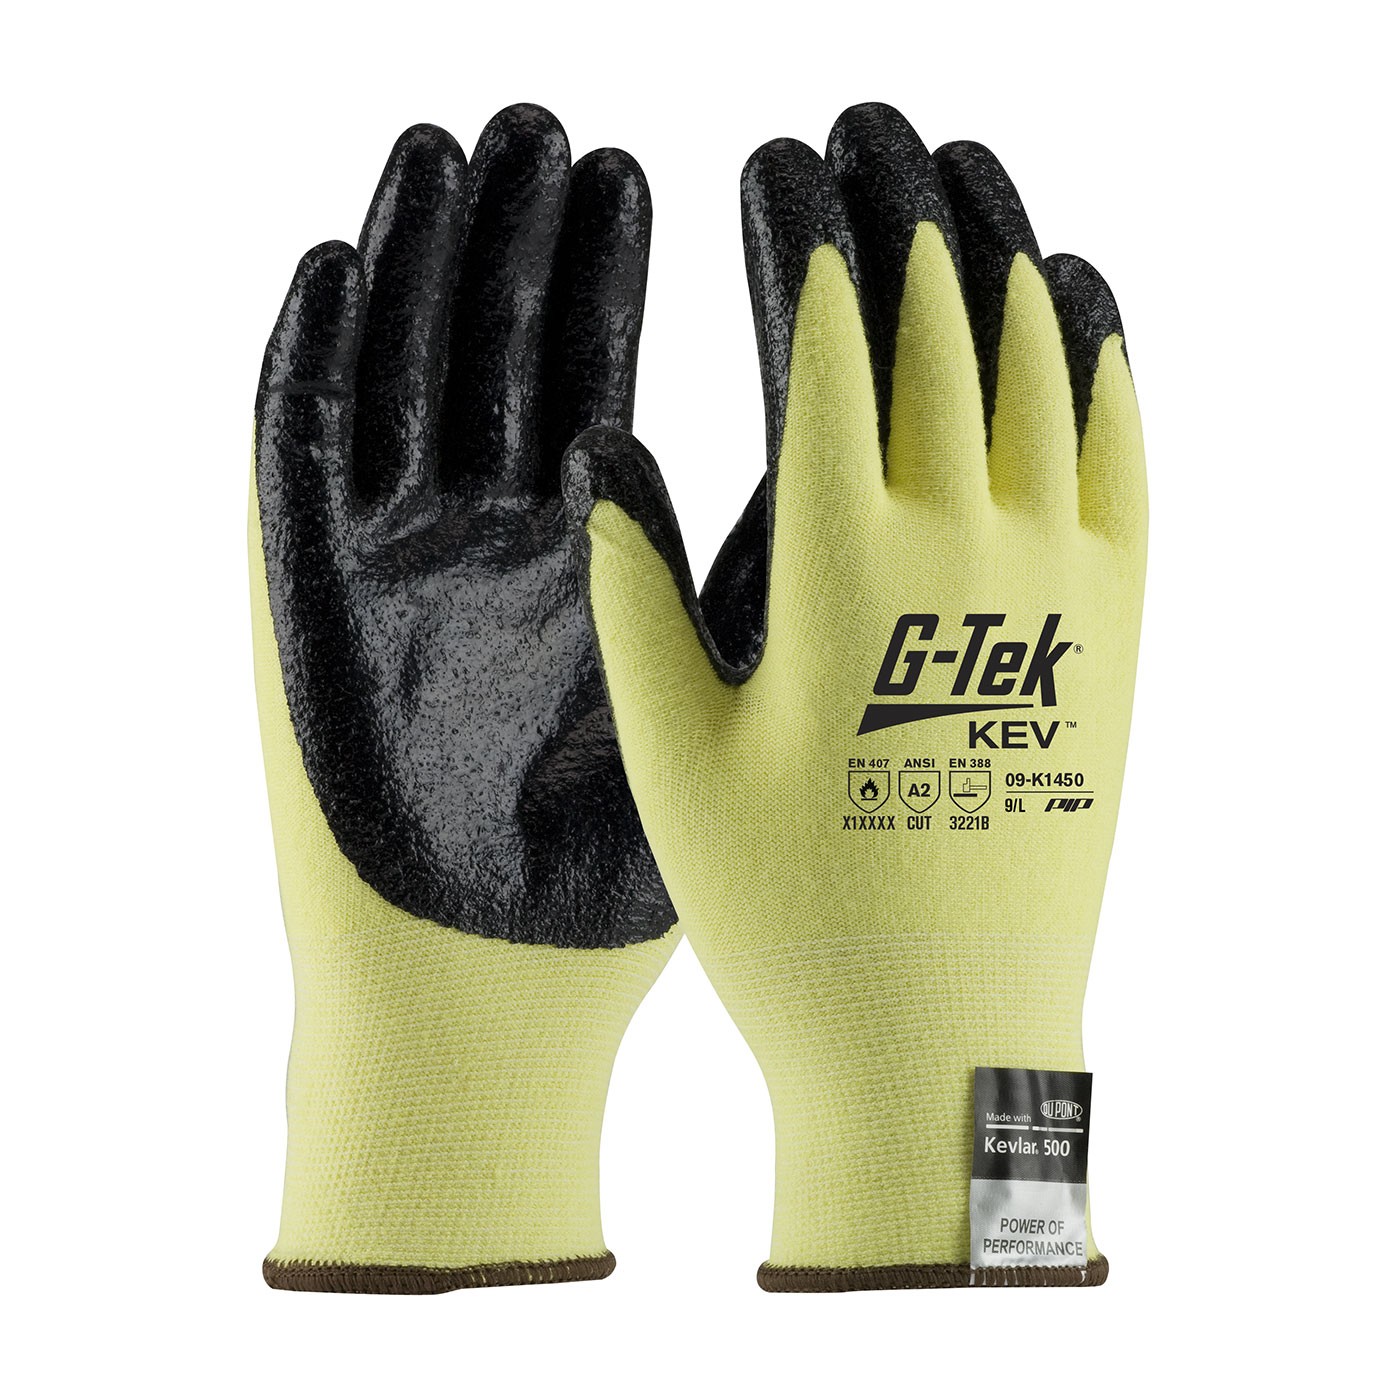 G-Tek® KEV™ Seamless Knit Kevlar® / Lycra Glove with Nitrile Coated Smooth Grip on Palm & Fingers - Medium Weight  (#09-K1450)